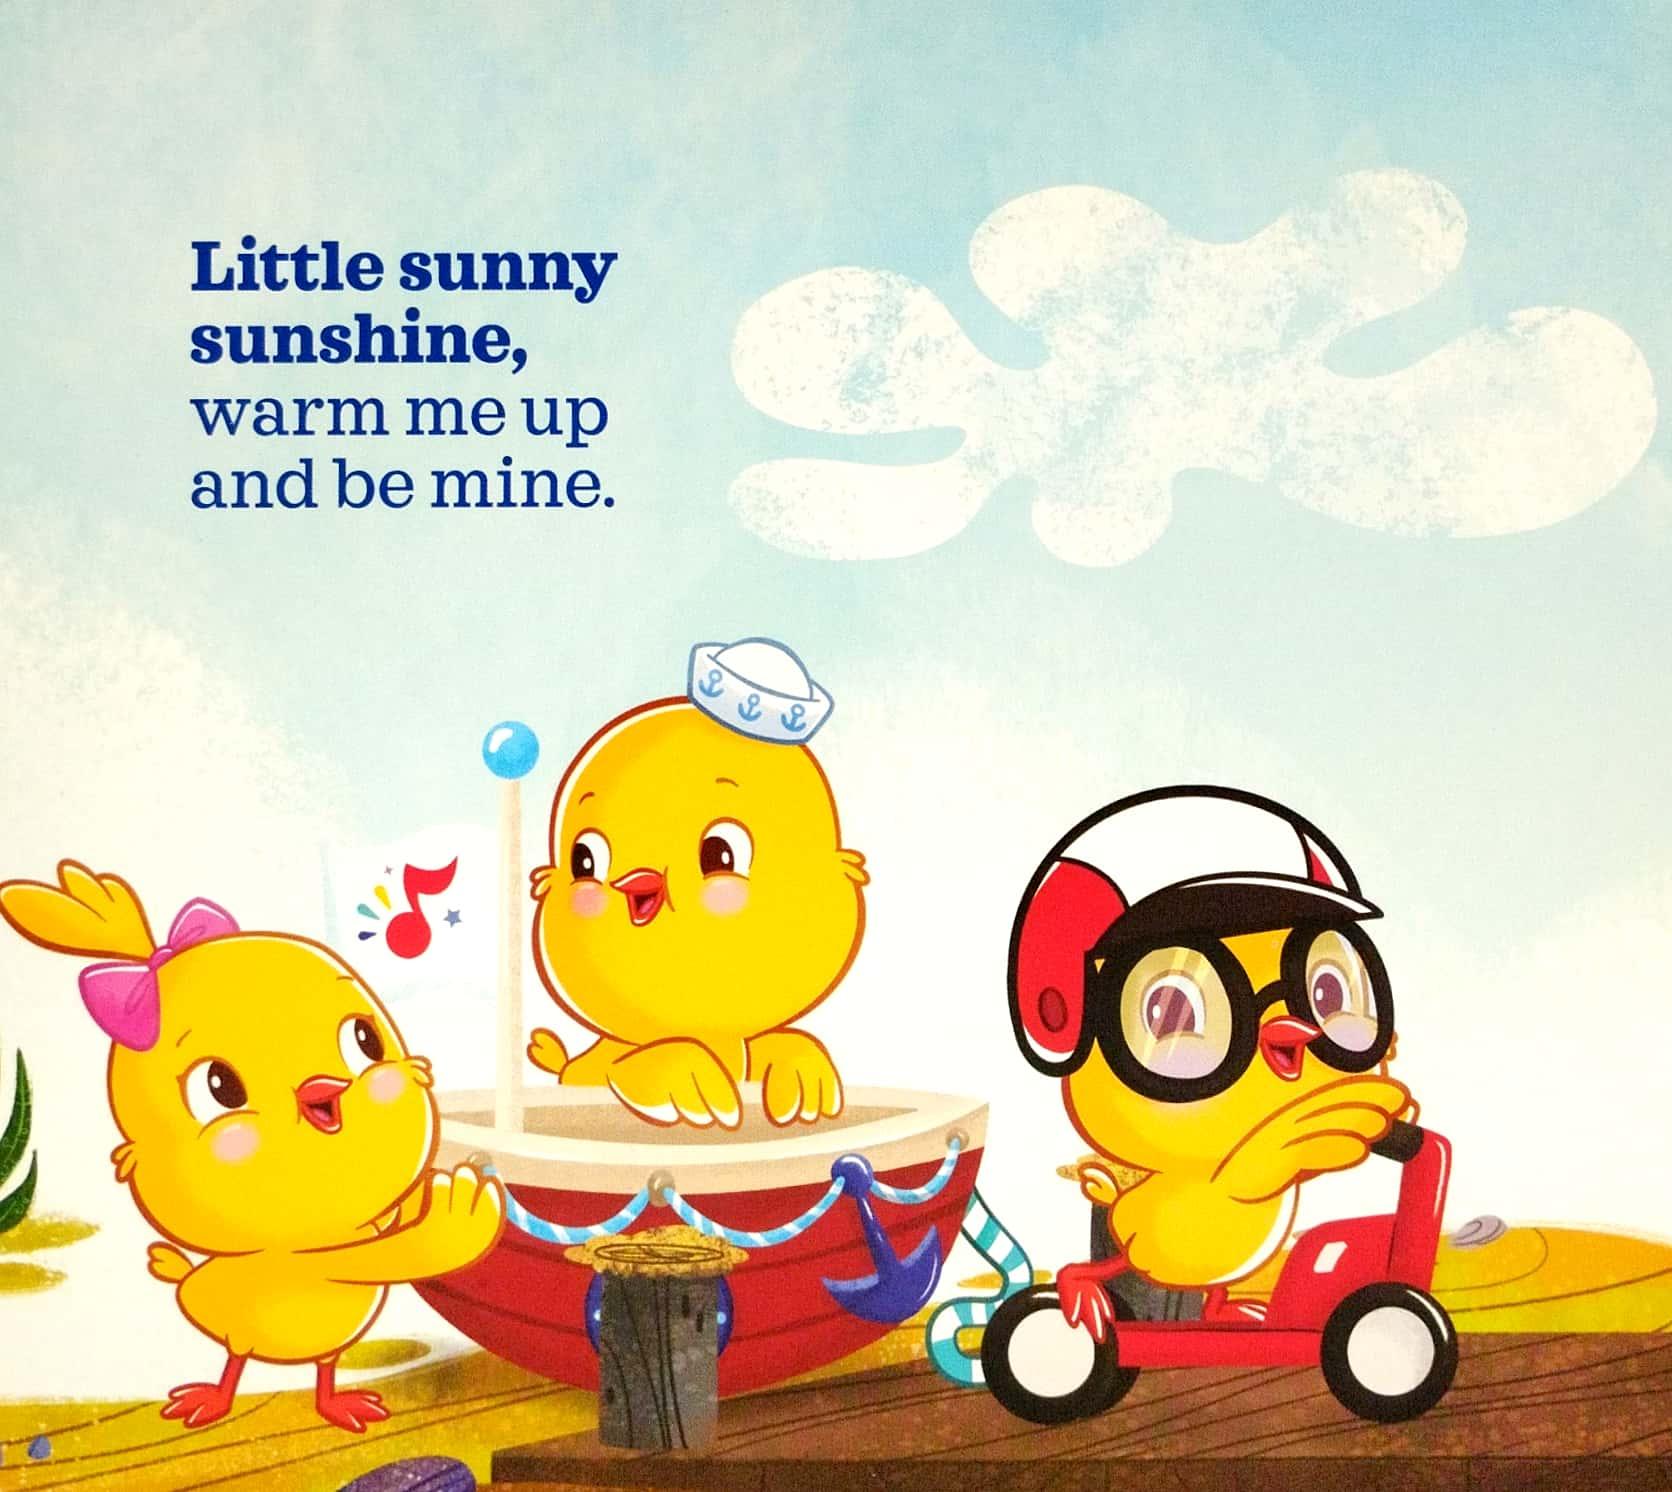 Little Sunny Sunshine / Sol Solecito: Bilingual Nursery Rhymes